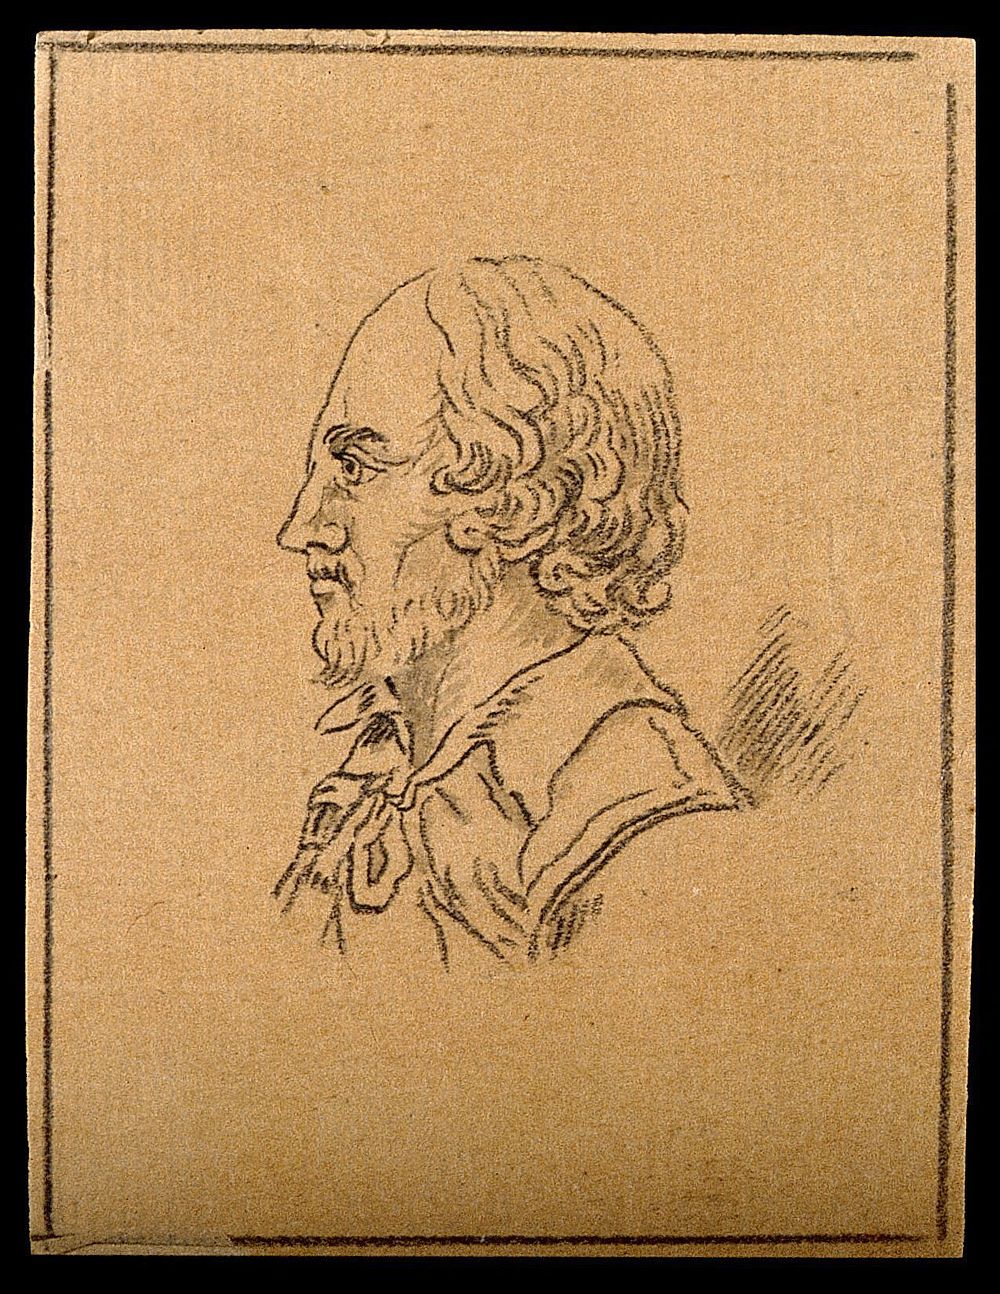 William Shakespeare: profile. Drawing, c. 1793.